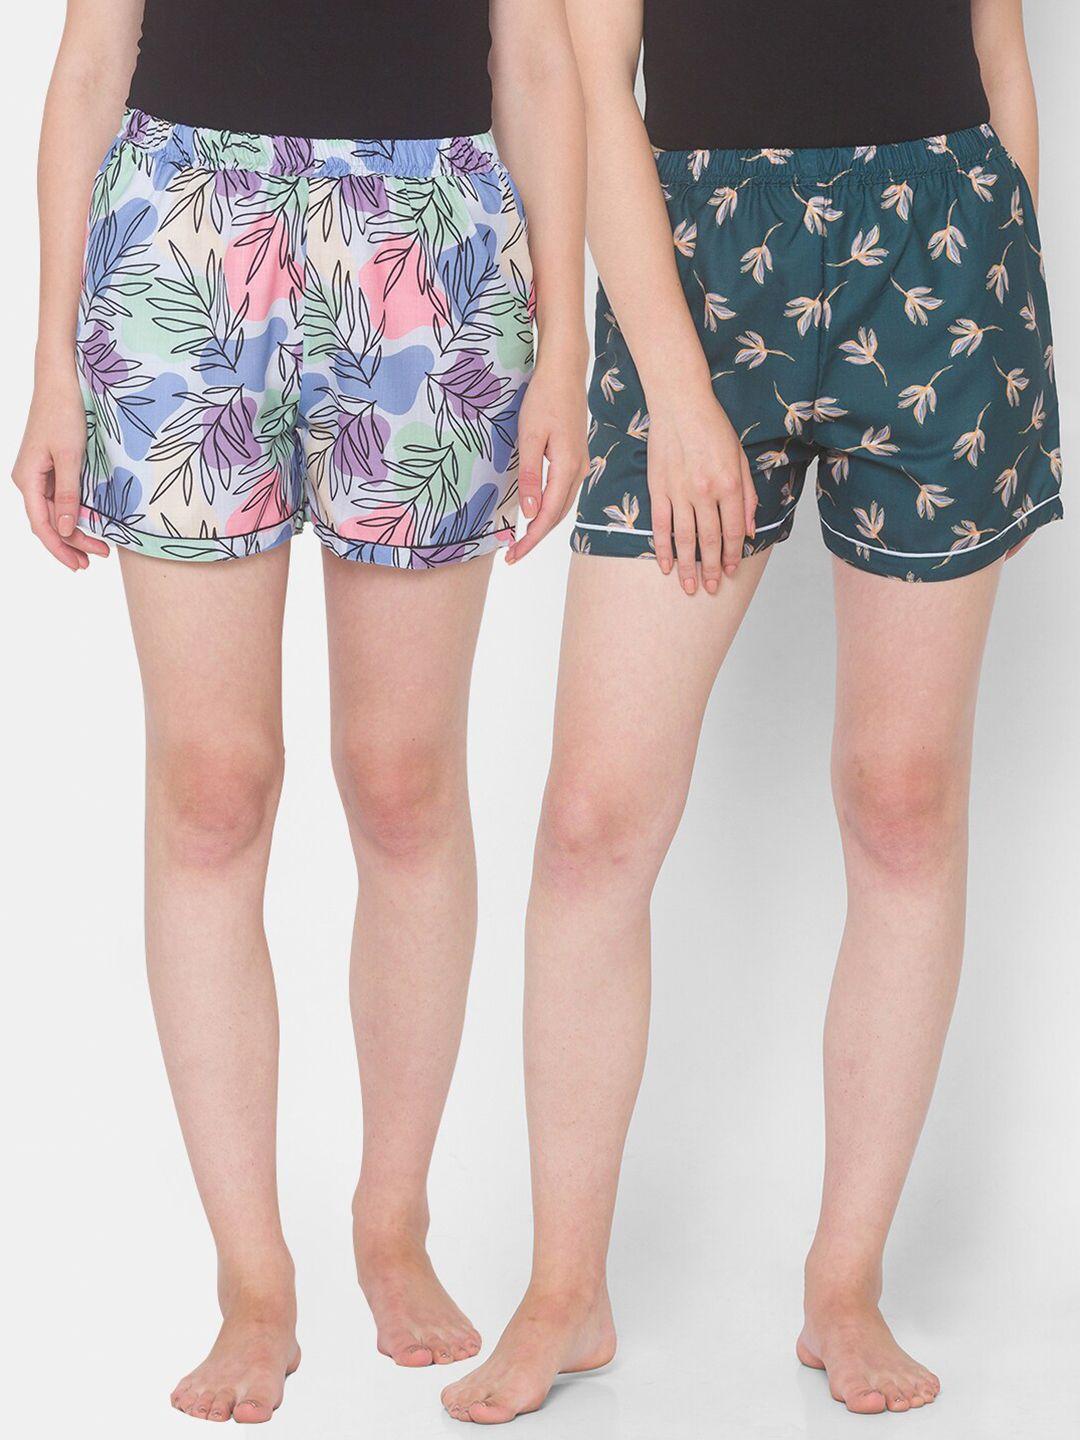 fashionrack-women-pack-of-2-printed-cotton-lounge-shorts